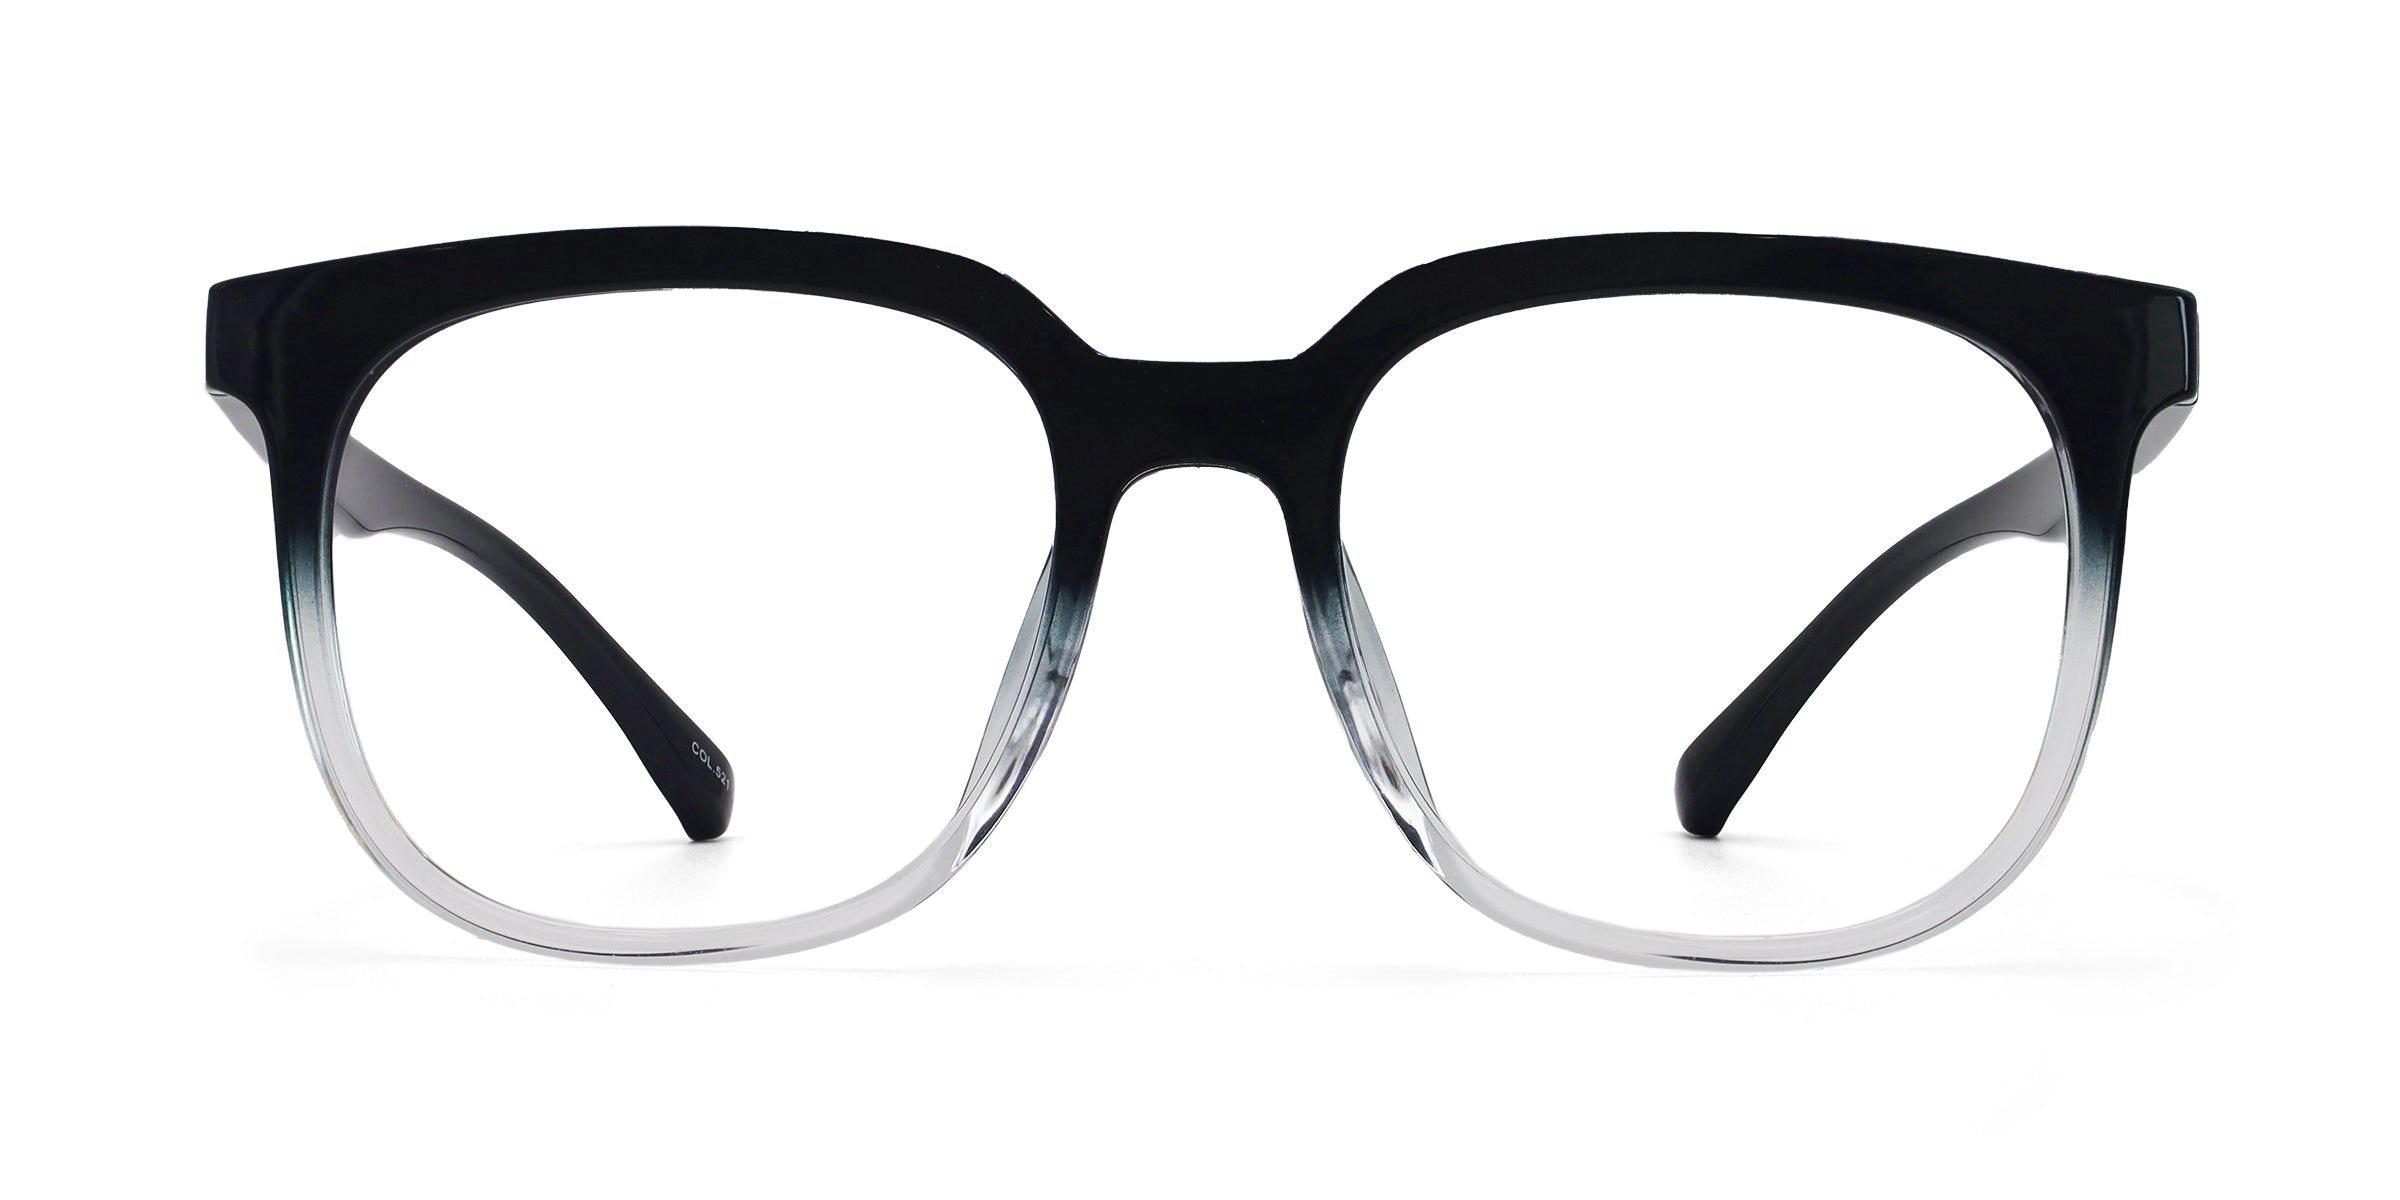 Buy Retro Clip on Aviator Sunglasses Polarized Flip up Lenses Driving  Eyeglasses Men (Silver/Polarized Grey) at Amazon.in